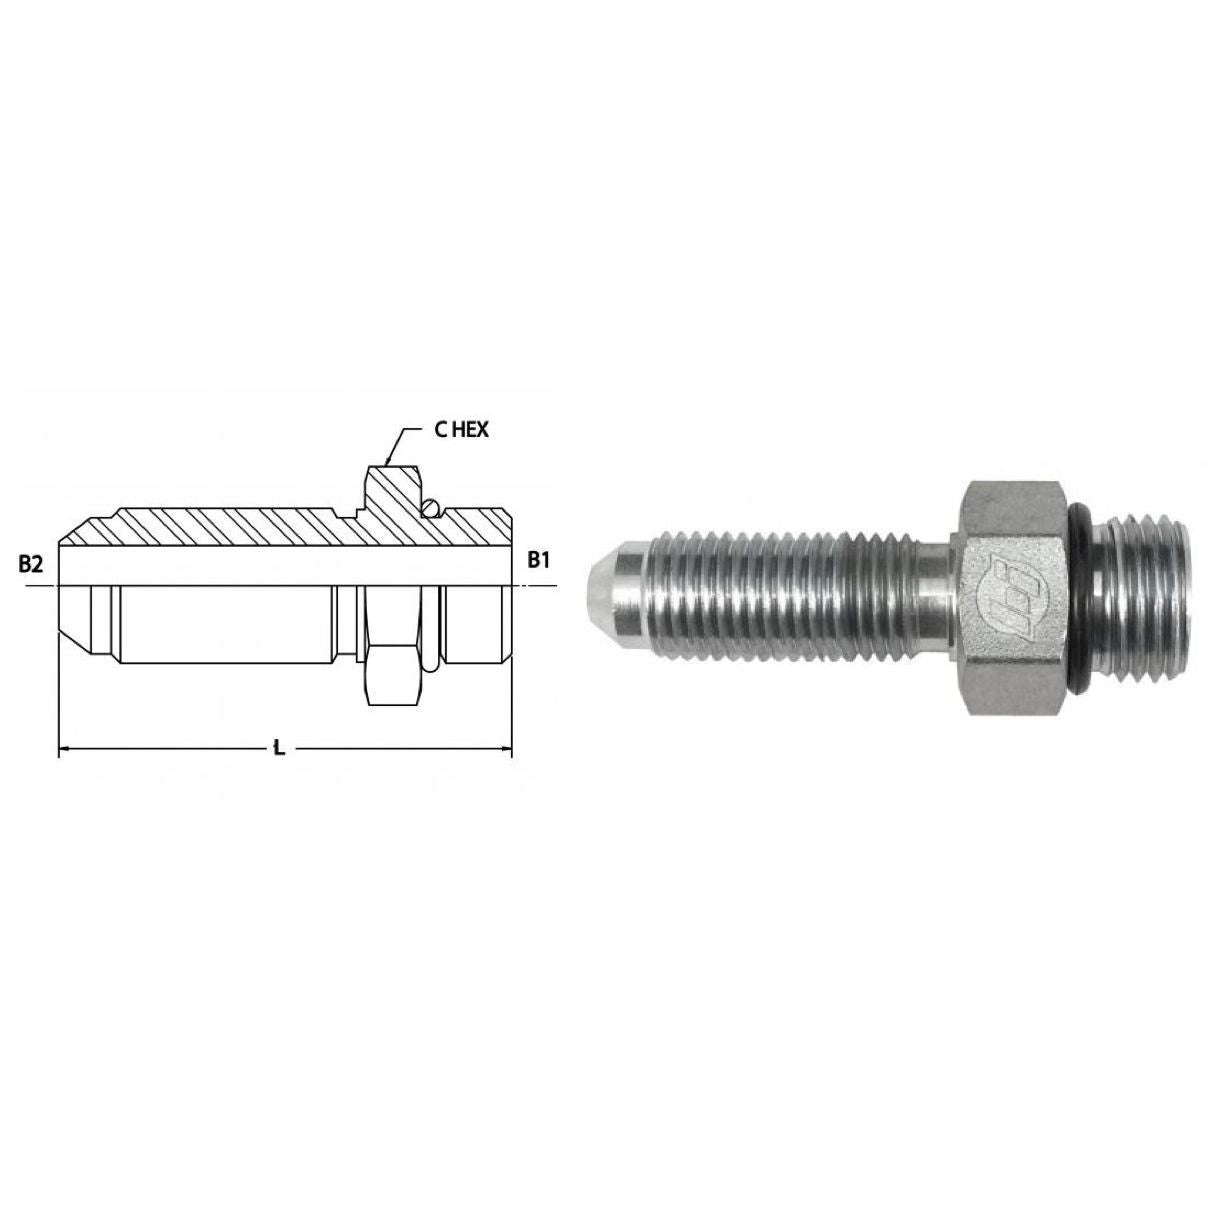 2764-06-06-O : OneHydraulics Bulkhead Straight Adapter, 0.375 (3/8) Male ORB x 0.375 (3/8) Male JIC, Steel, 6000psi